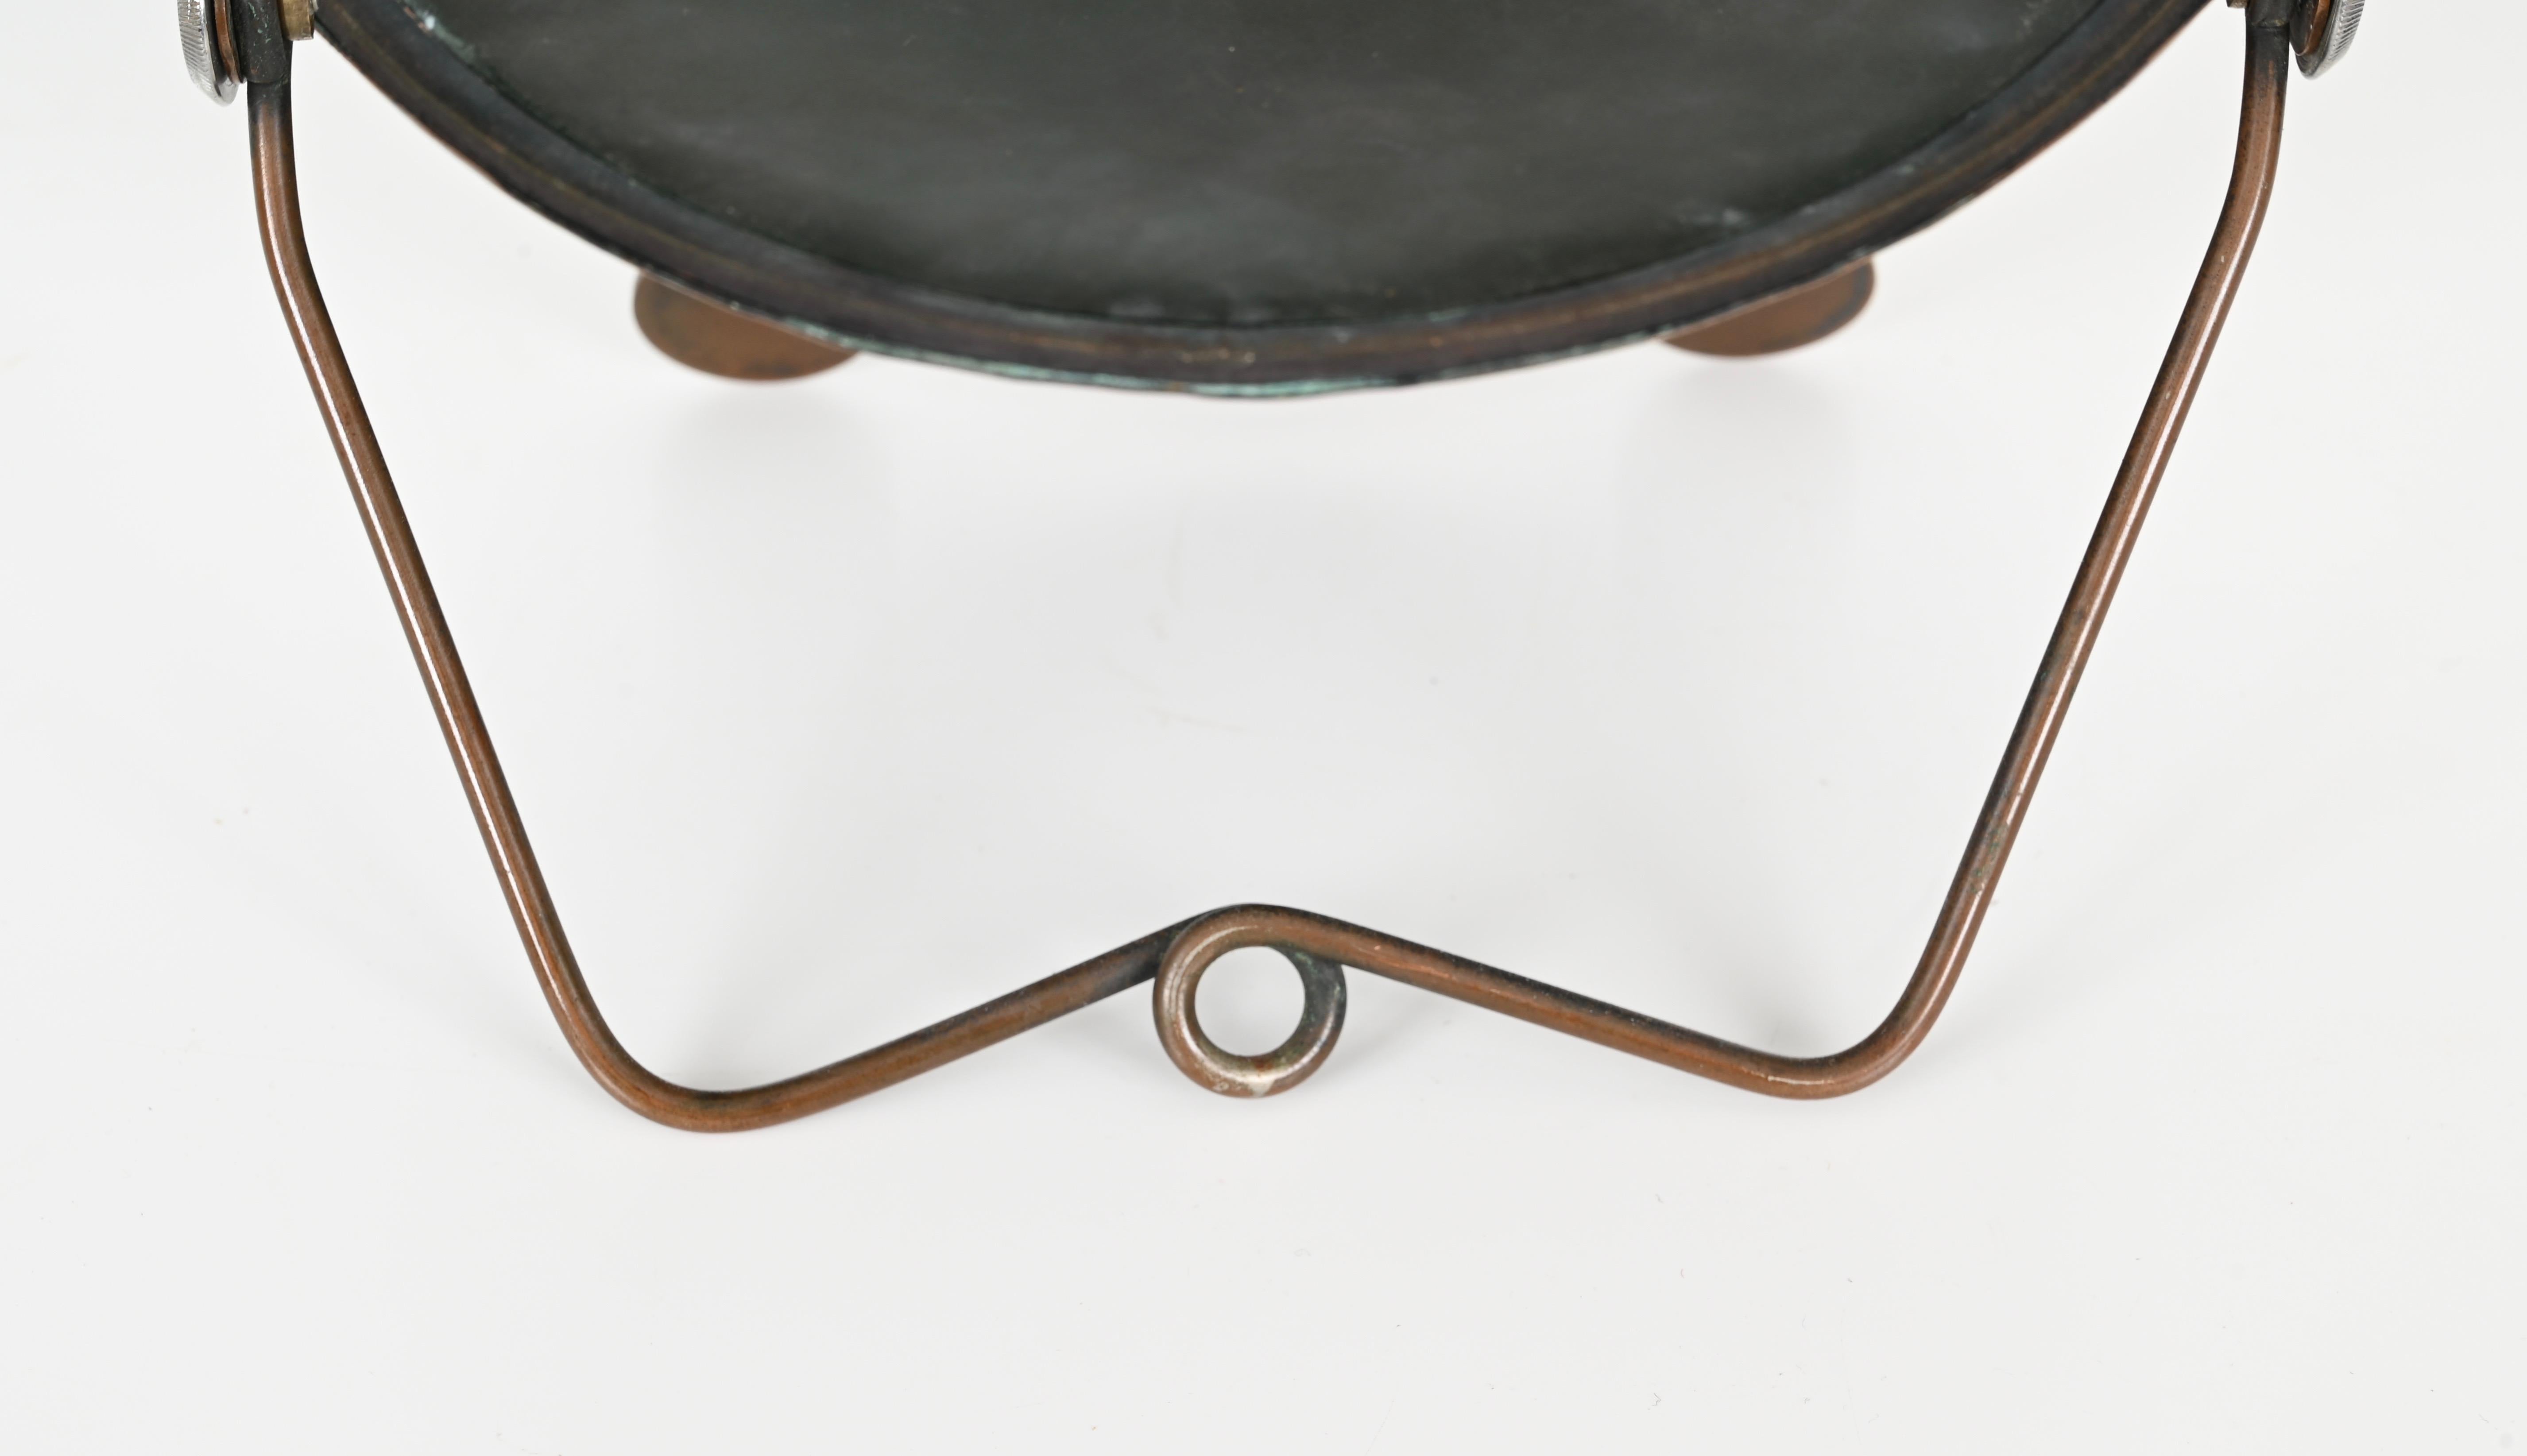 Italian Art Deco Adjustable Copper Table Mirror, Italy 1930s For Sale 9